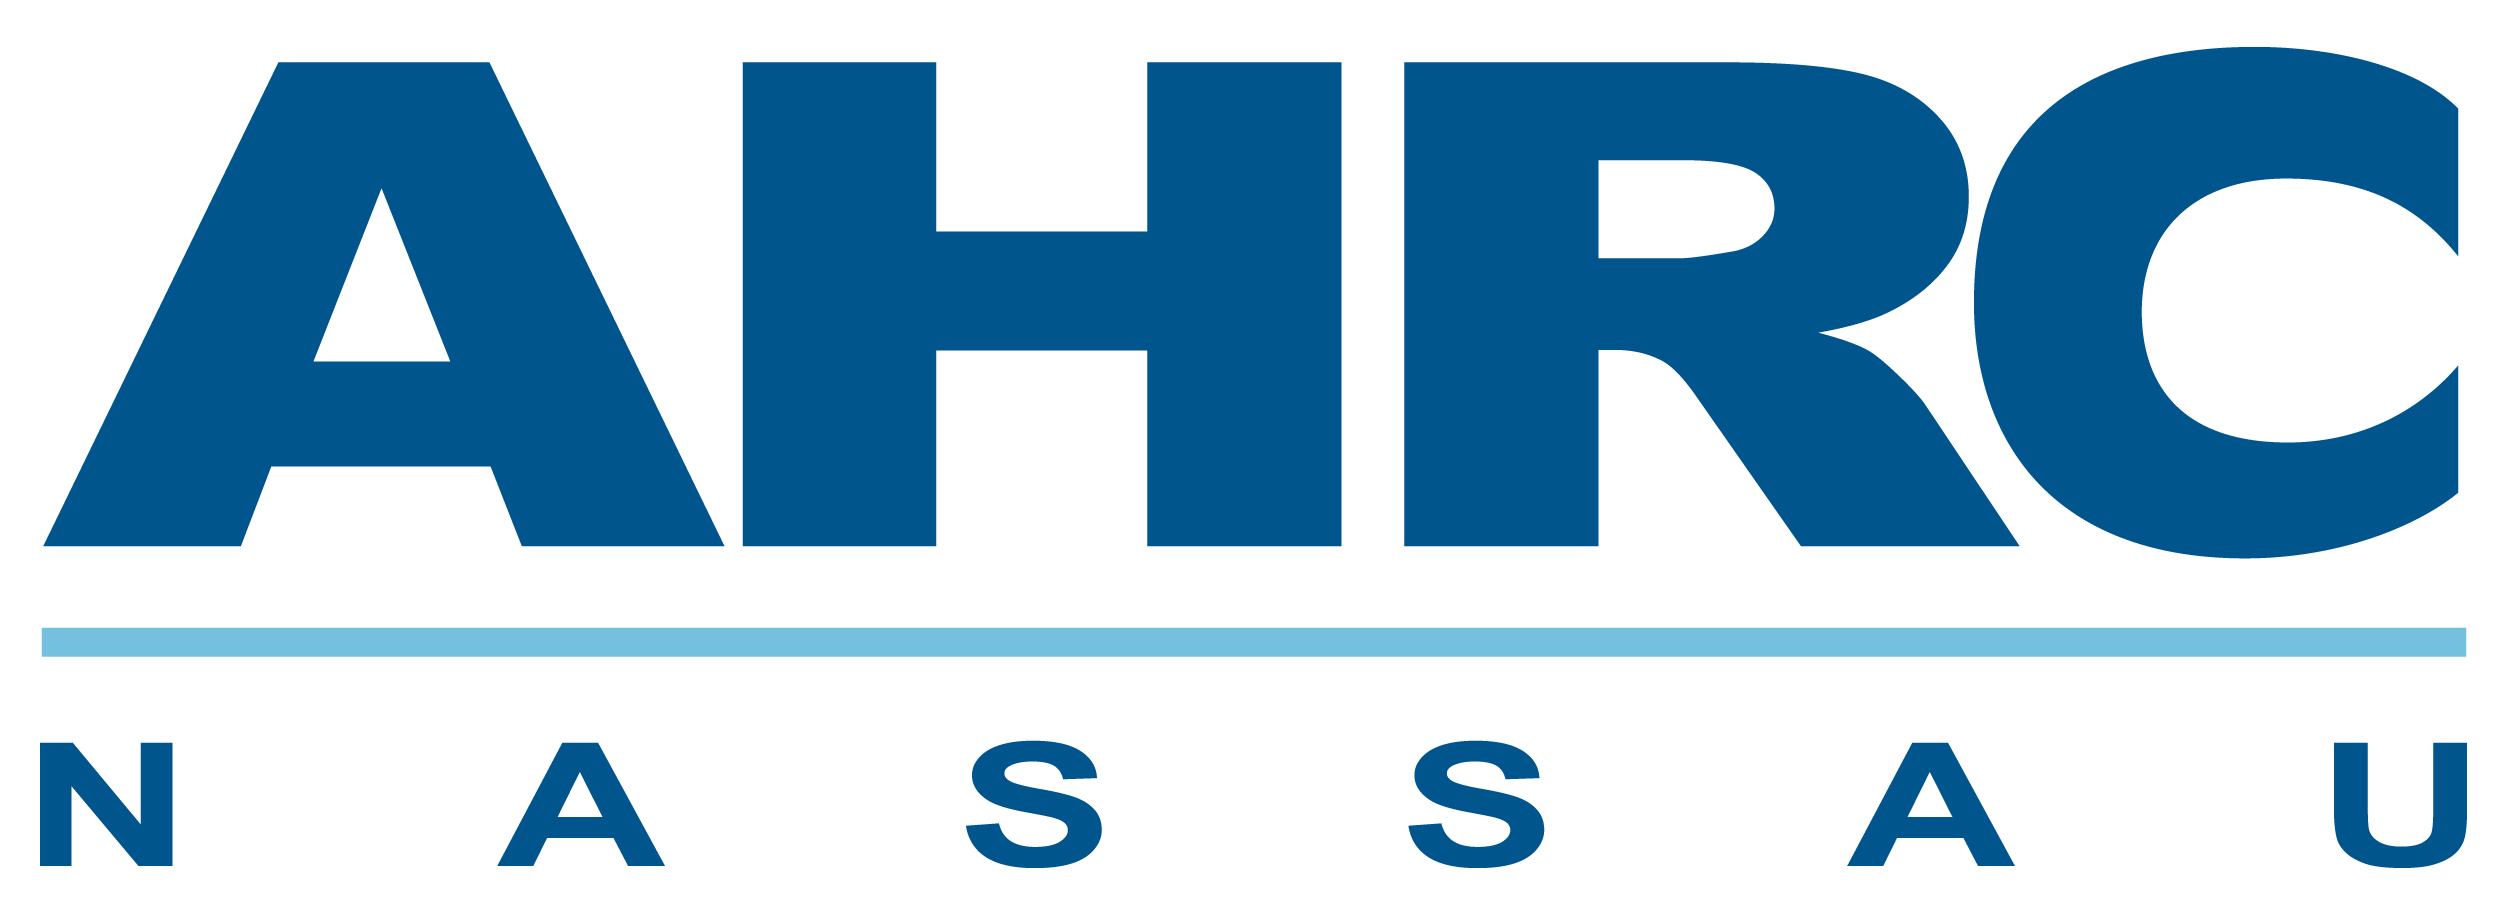 AHRC logo blue.jpg